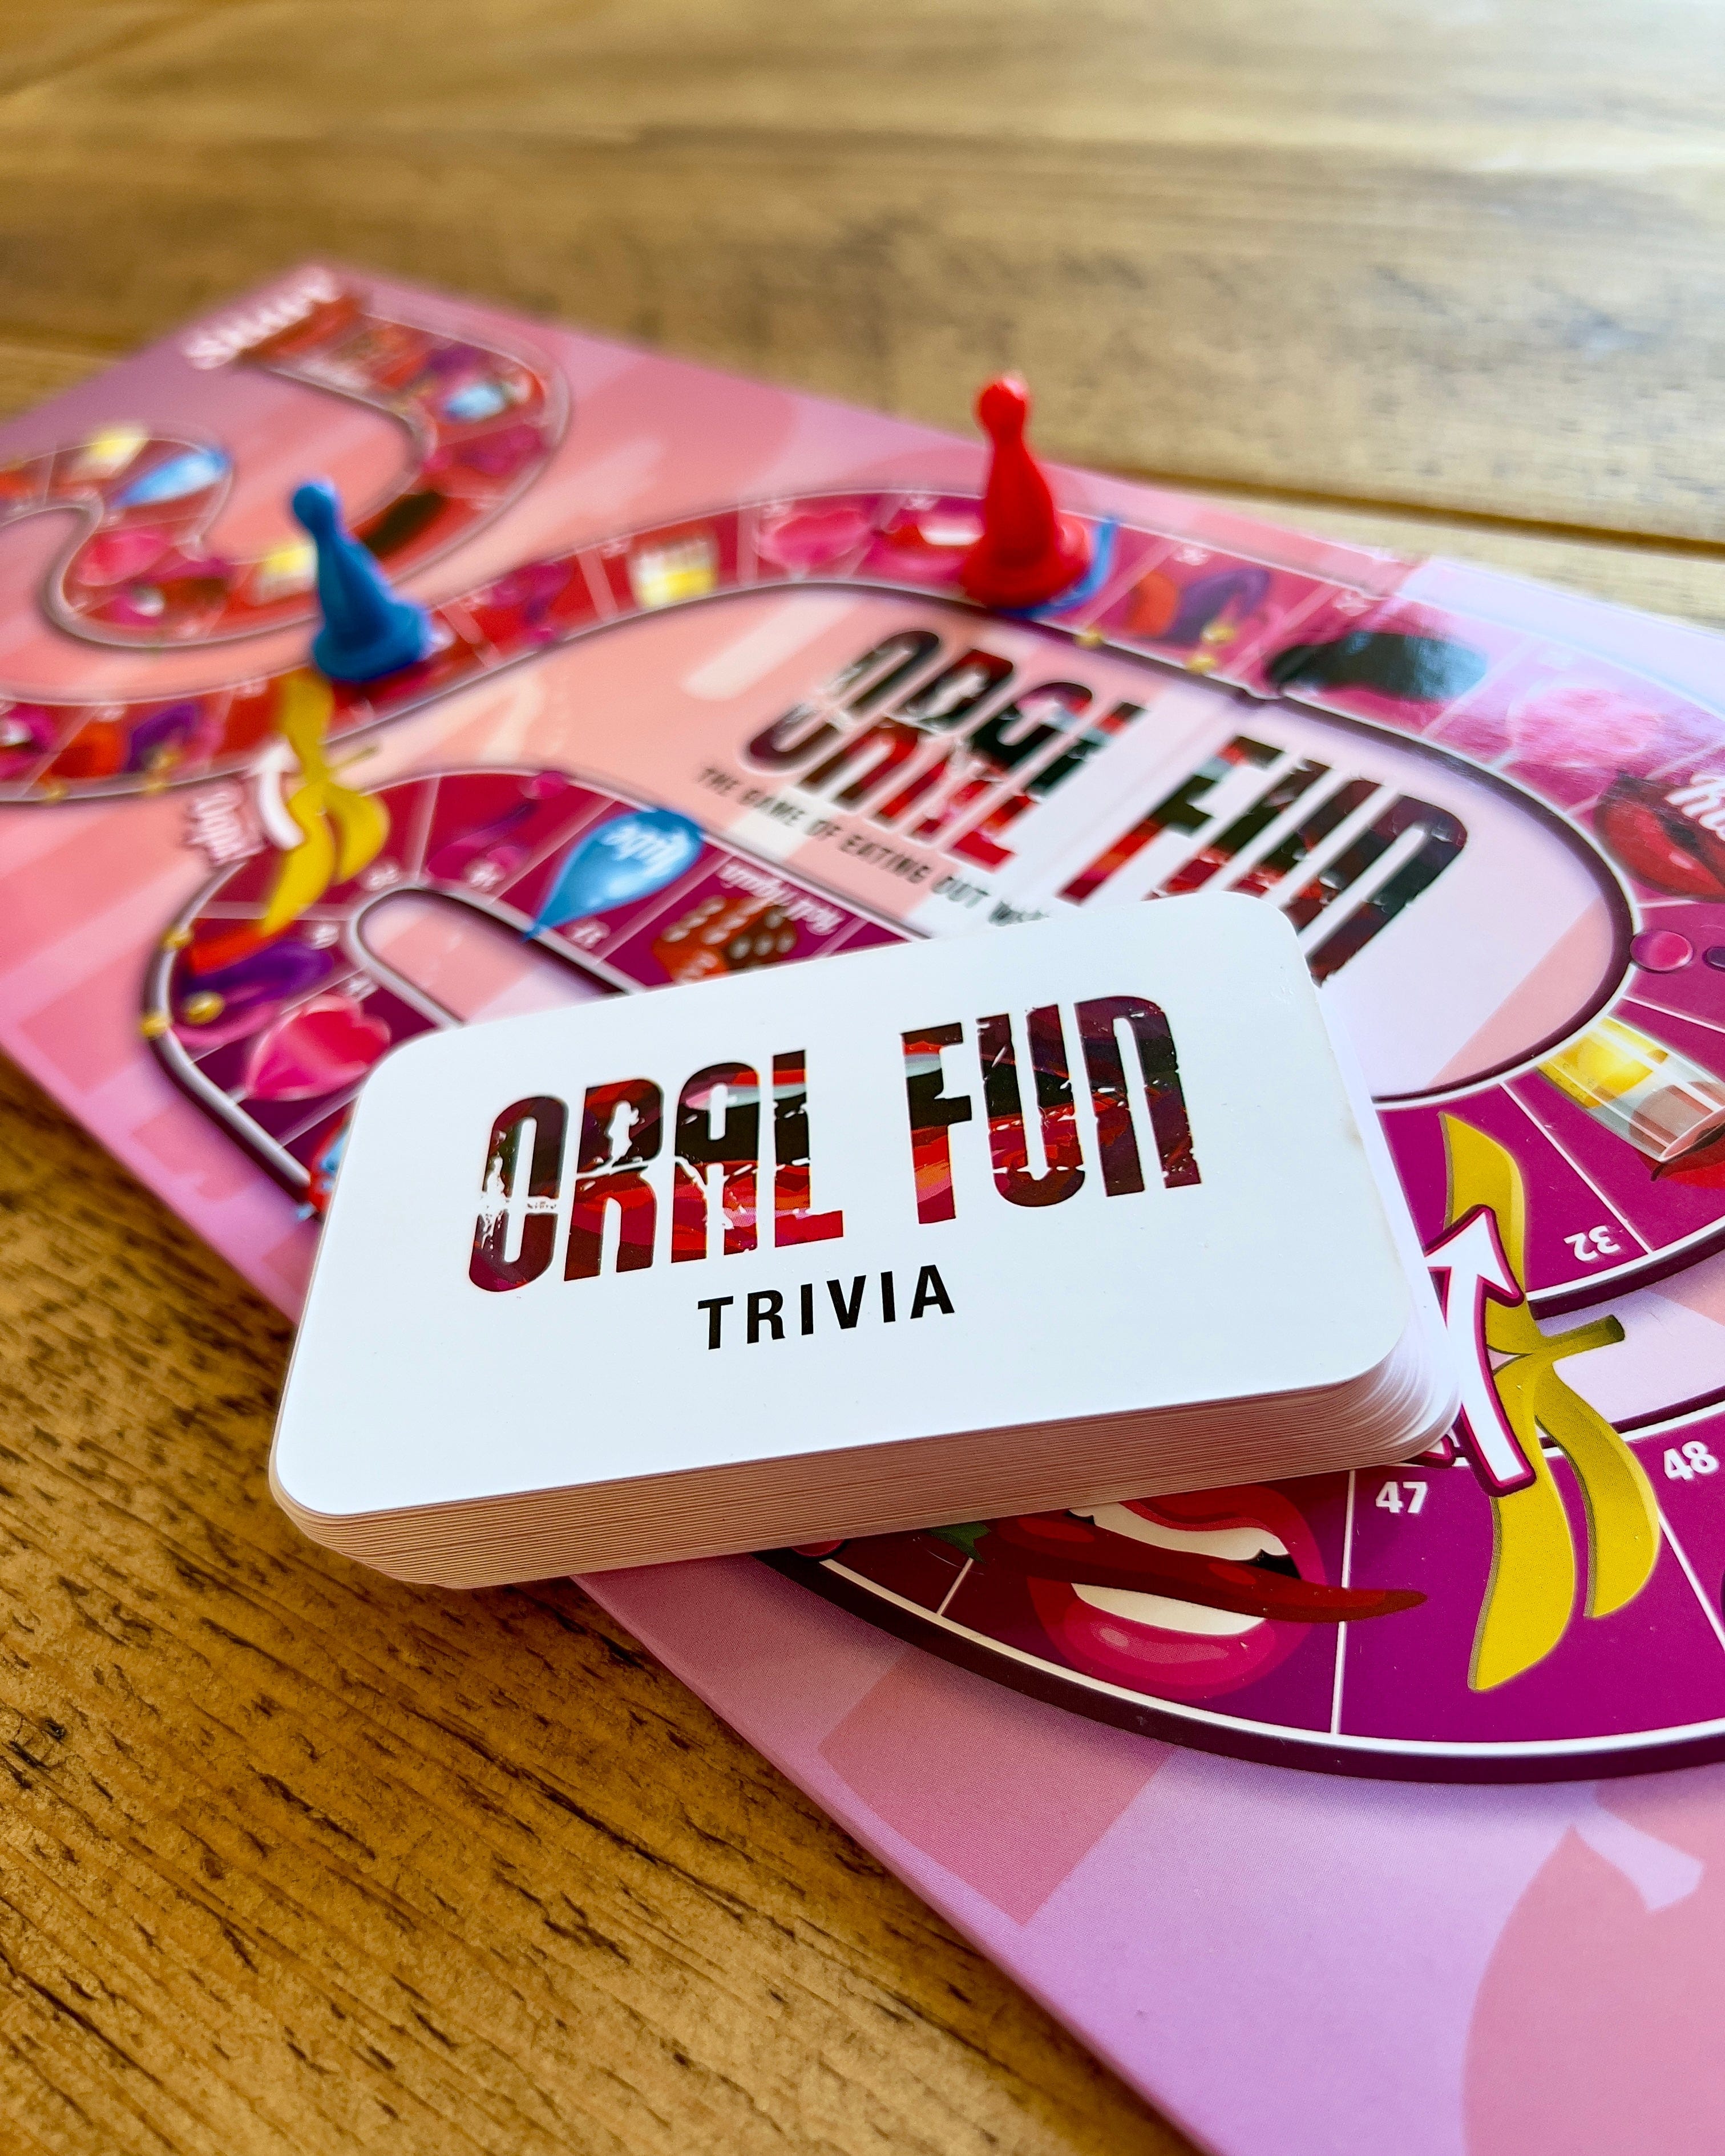 Oral fun board game trivia cards